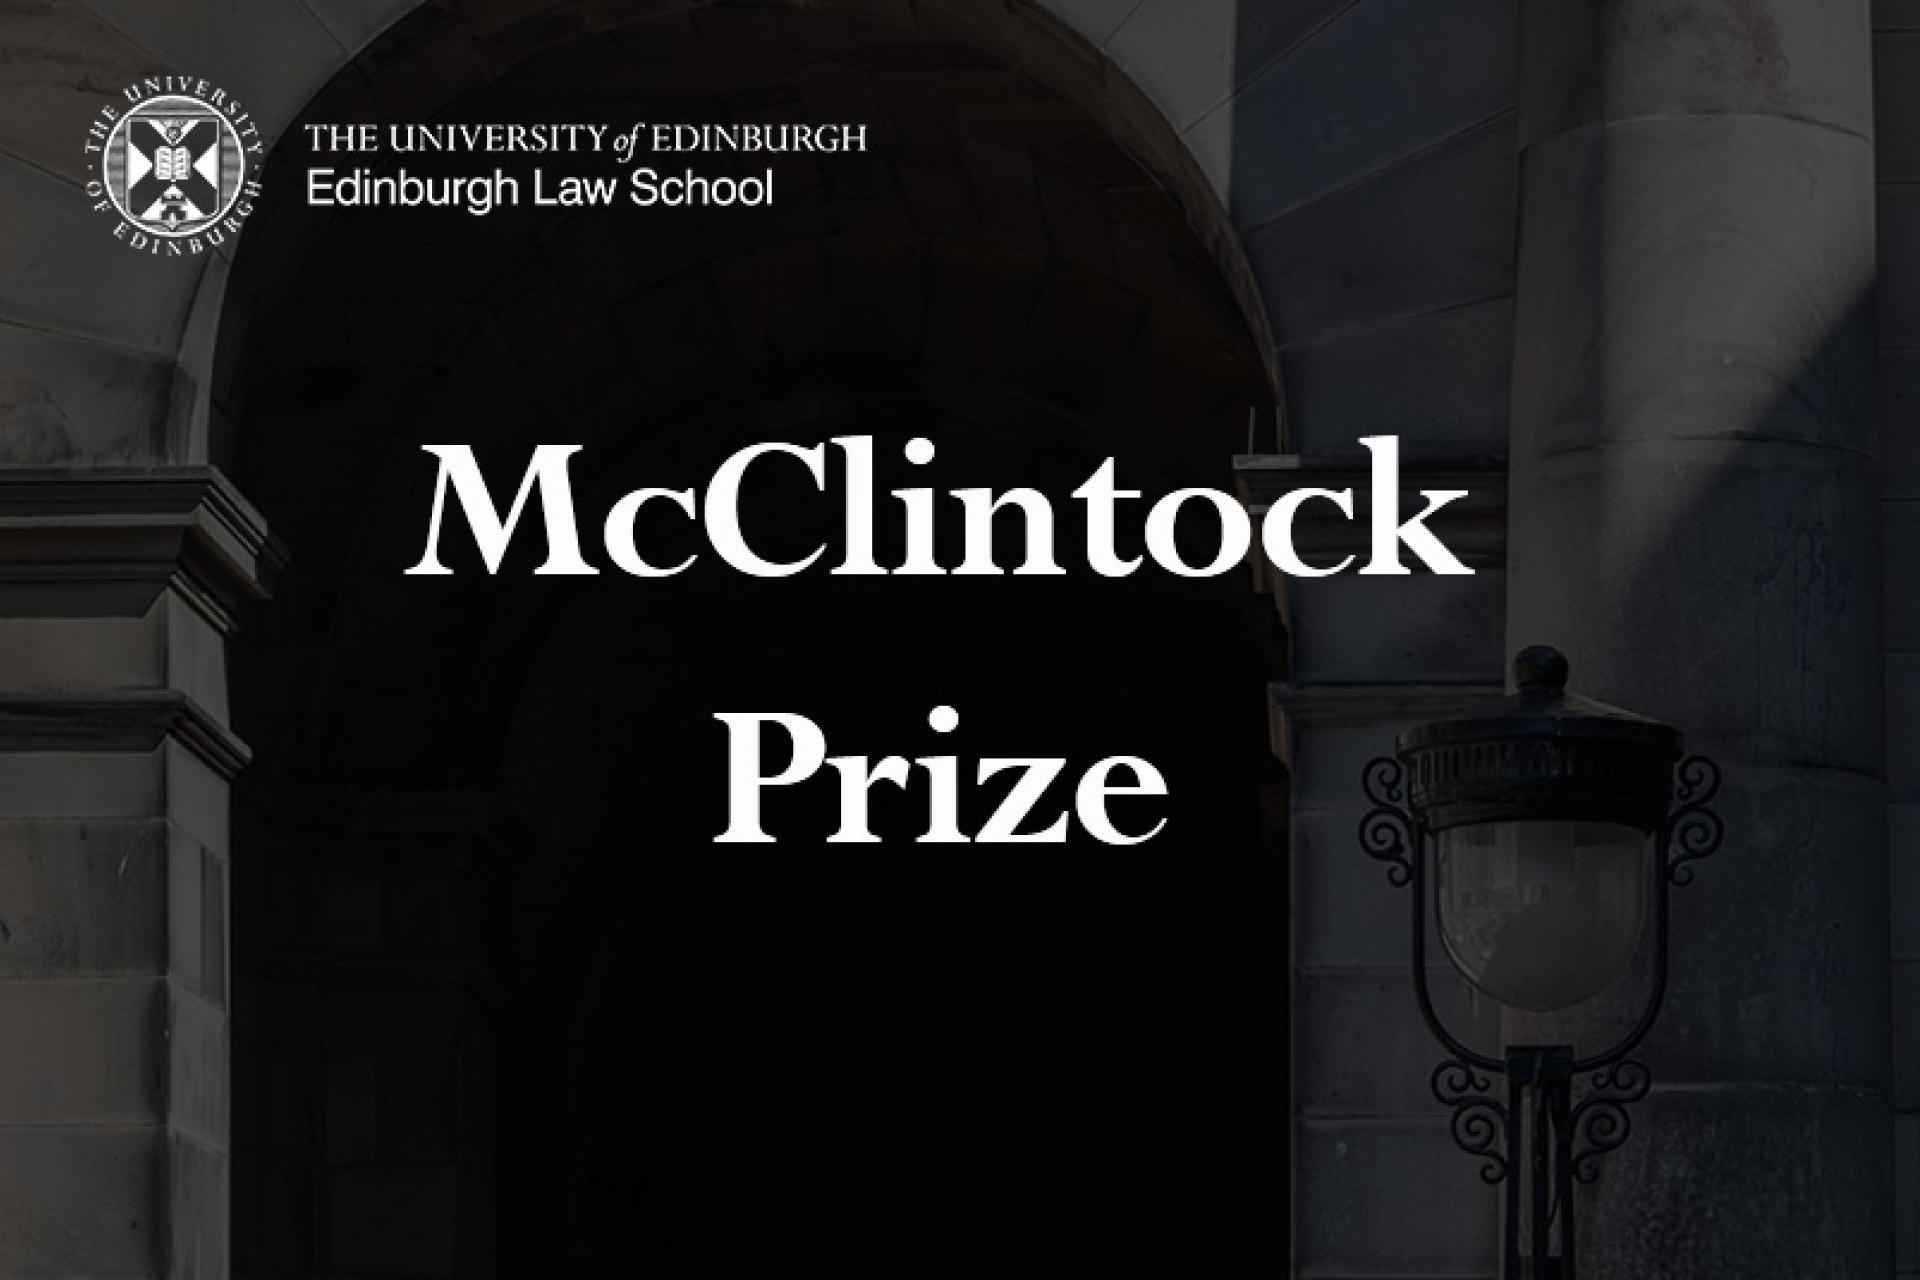 McClintock Prize